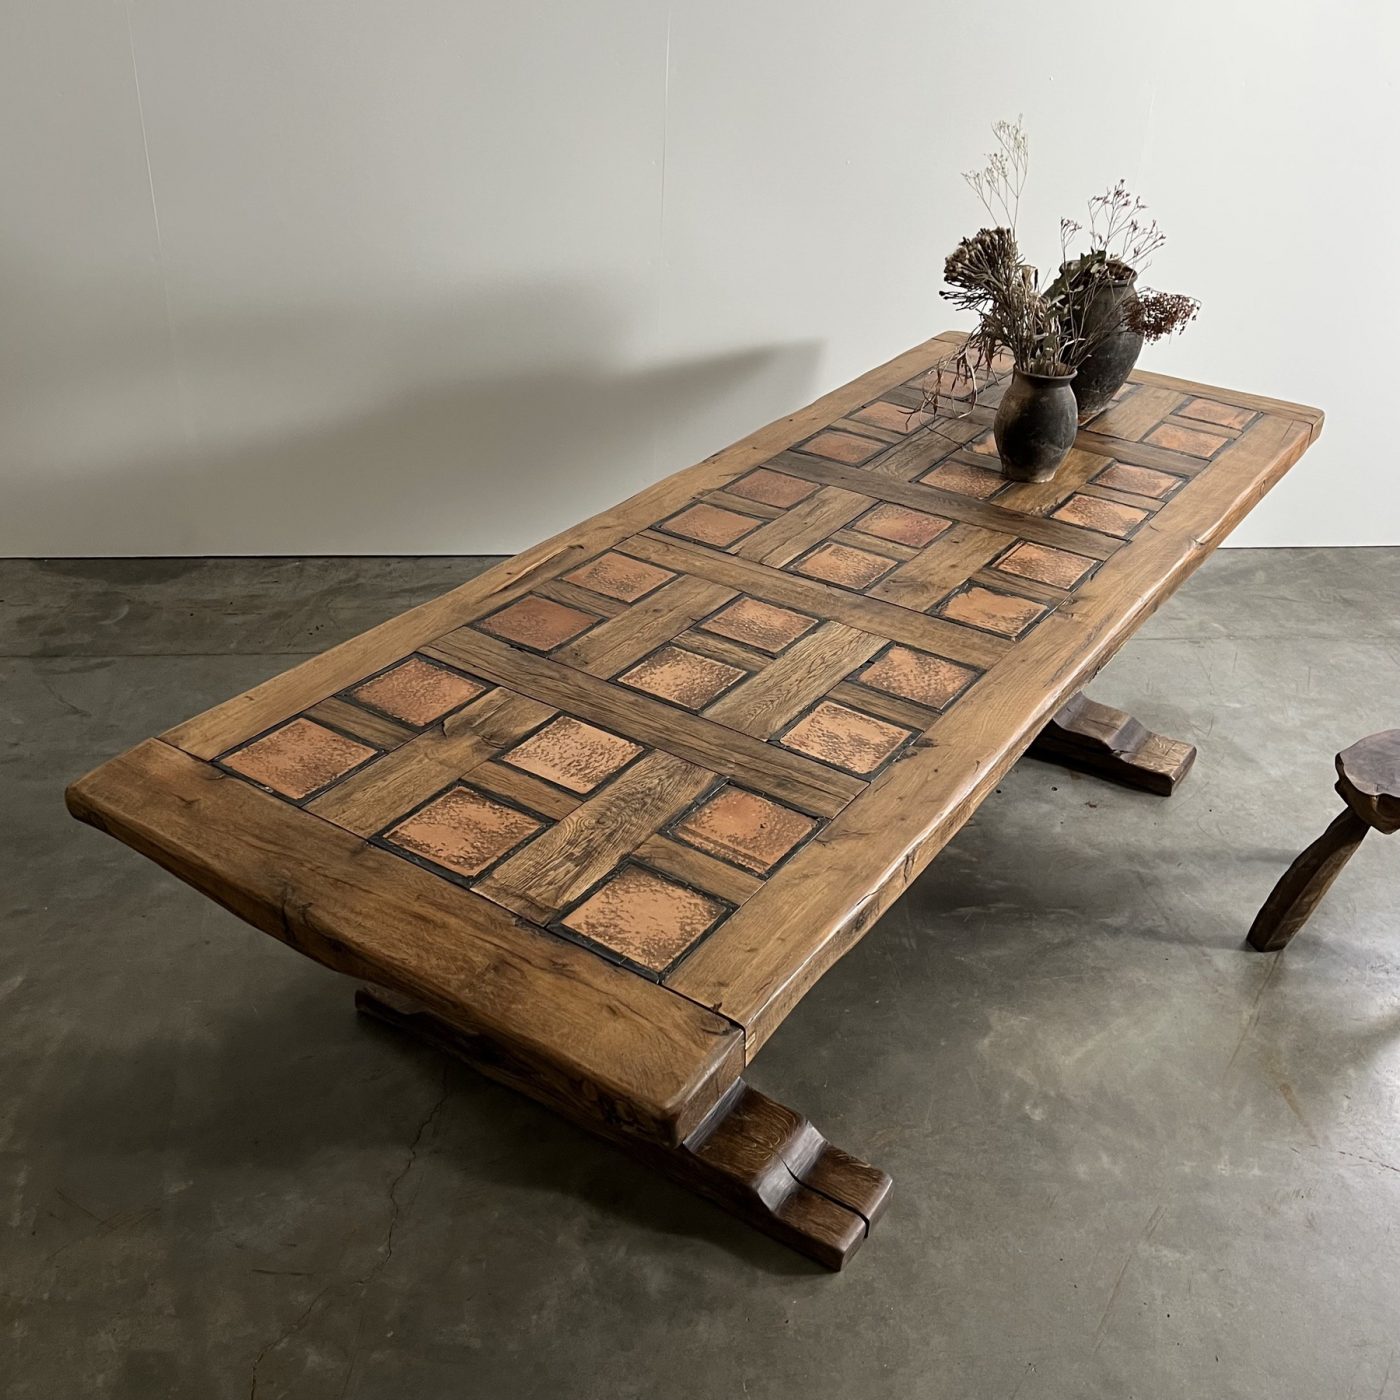 objet-vagabond-massive-table0008